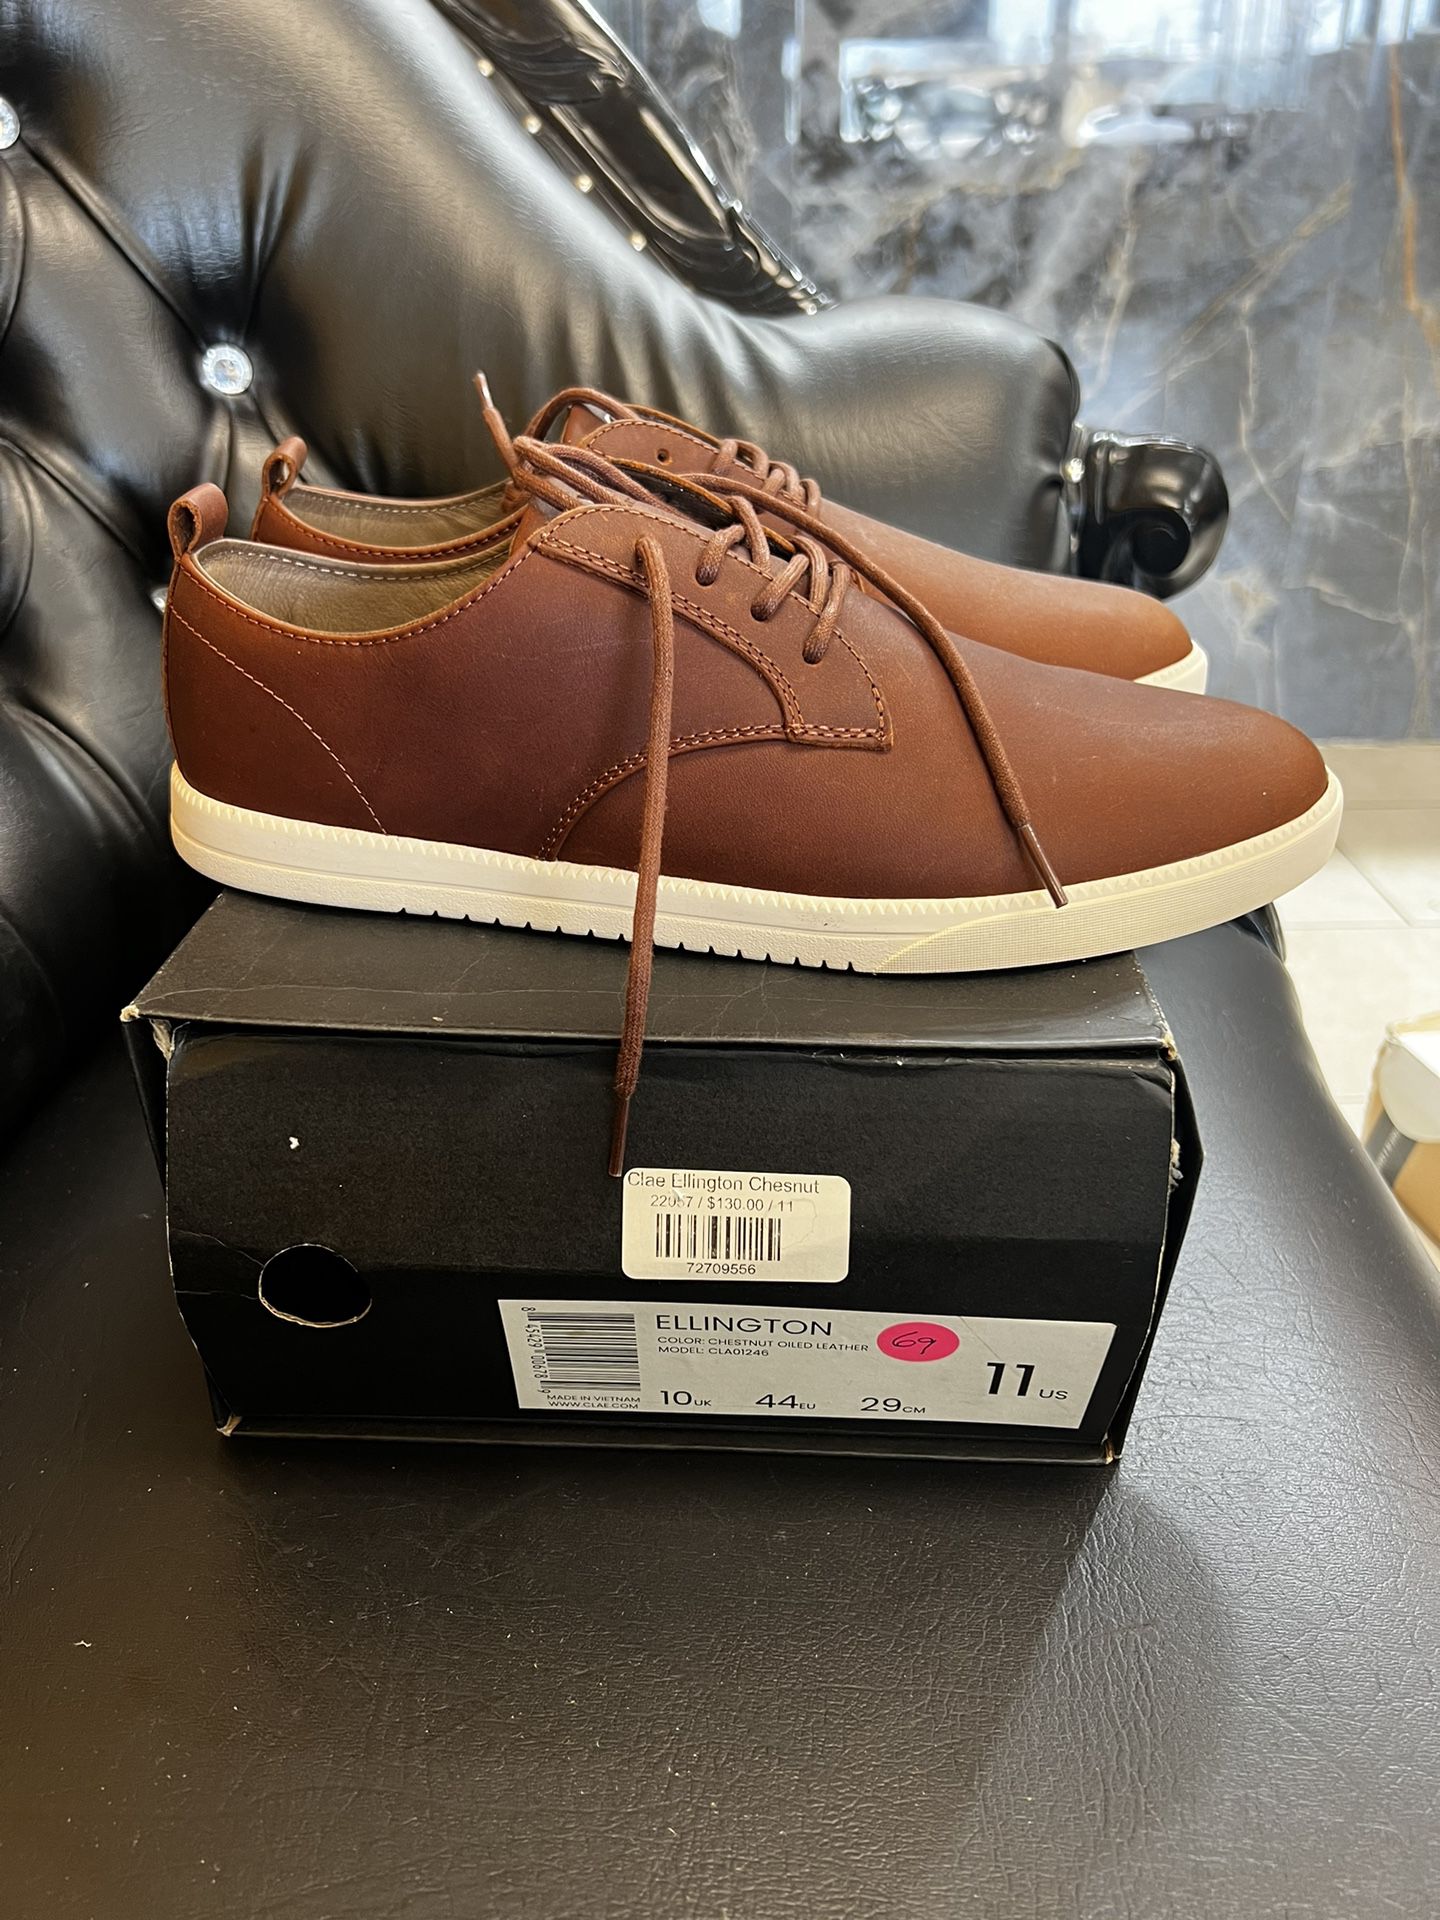 Clae Ellington Leather Shoes in box size 11US